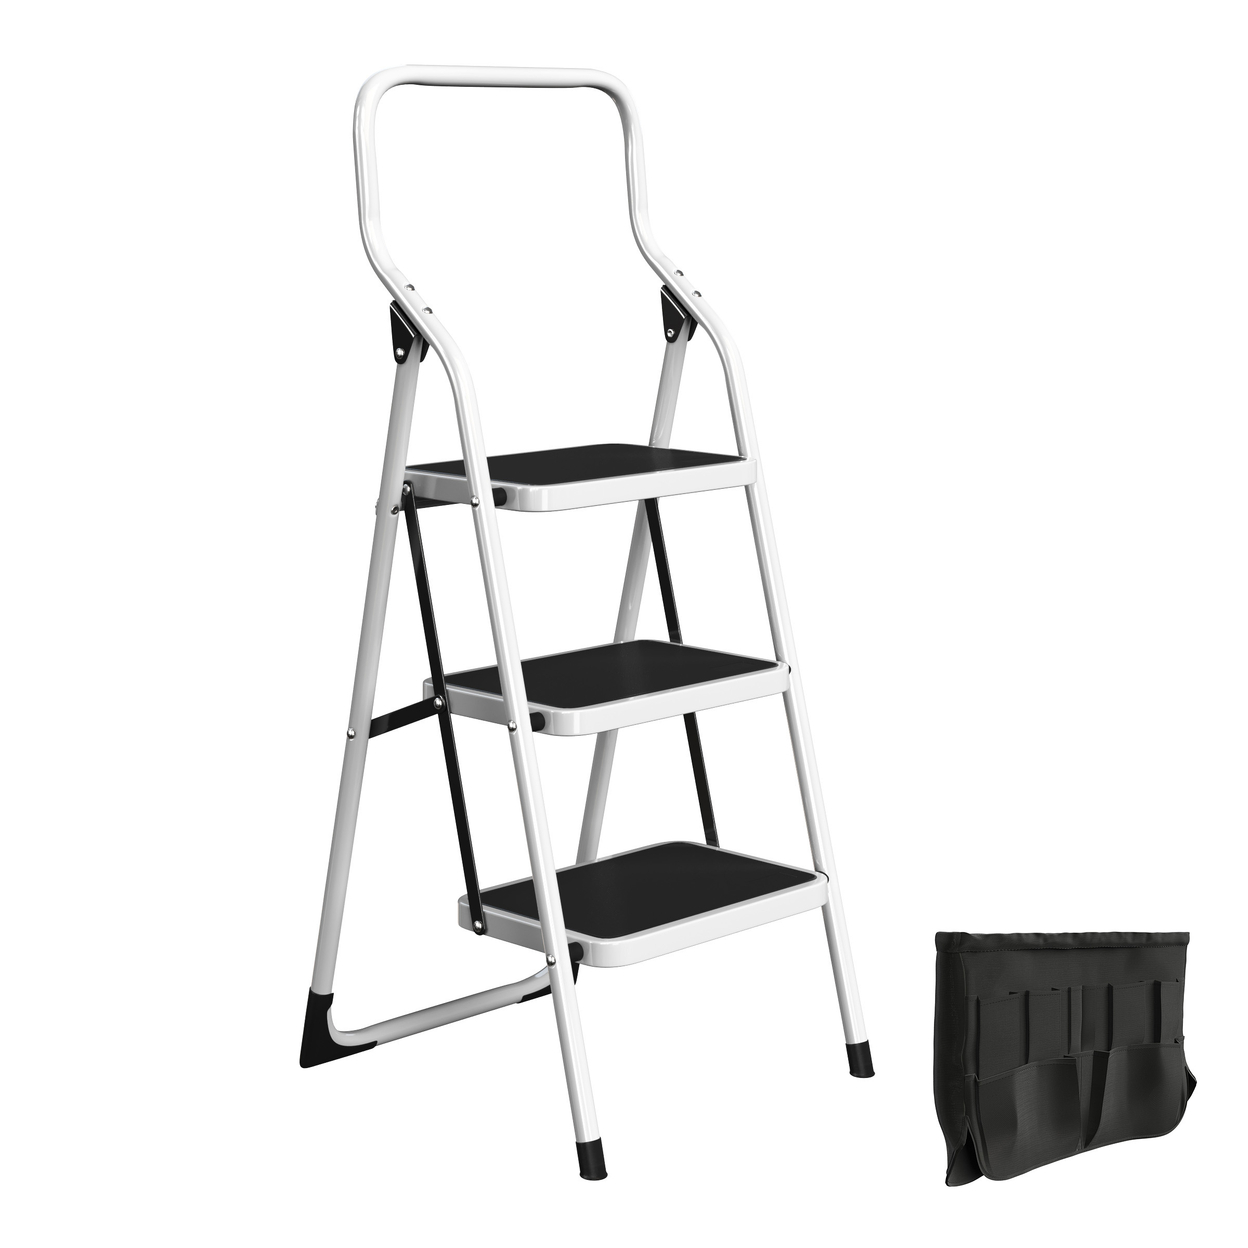 3 Step Ladder Dolly Folding Cart Step Stool Utility Hand Rails